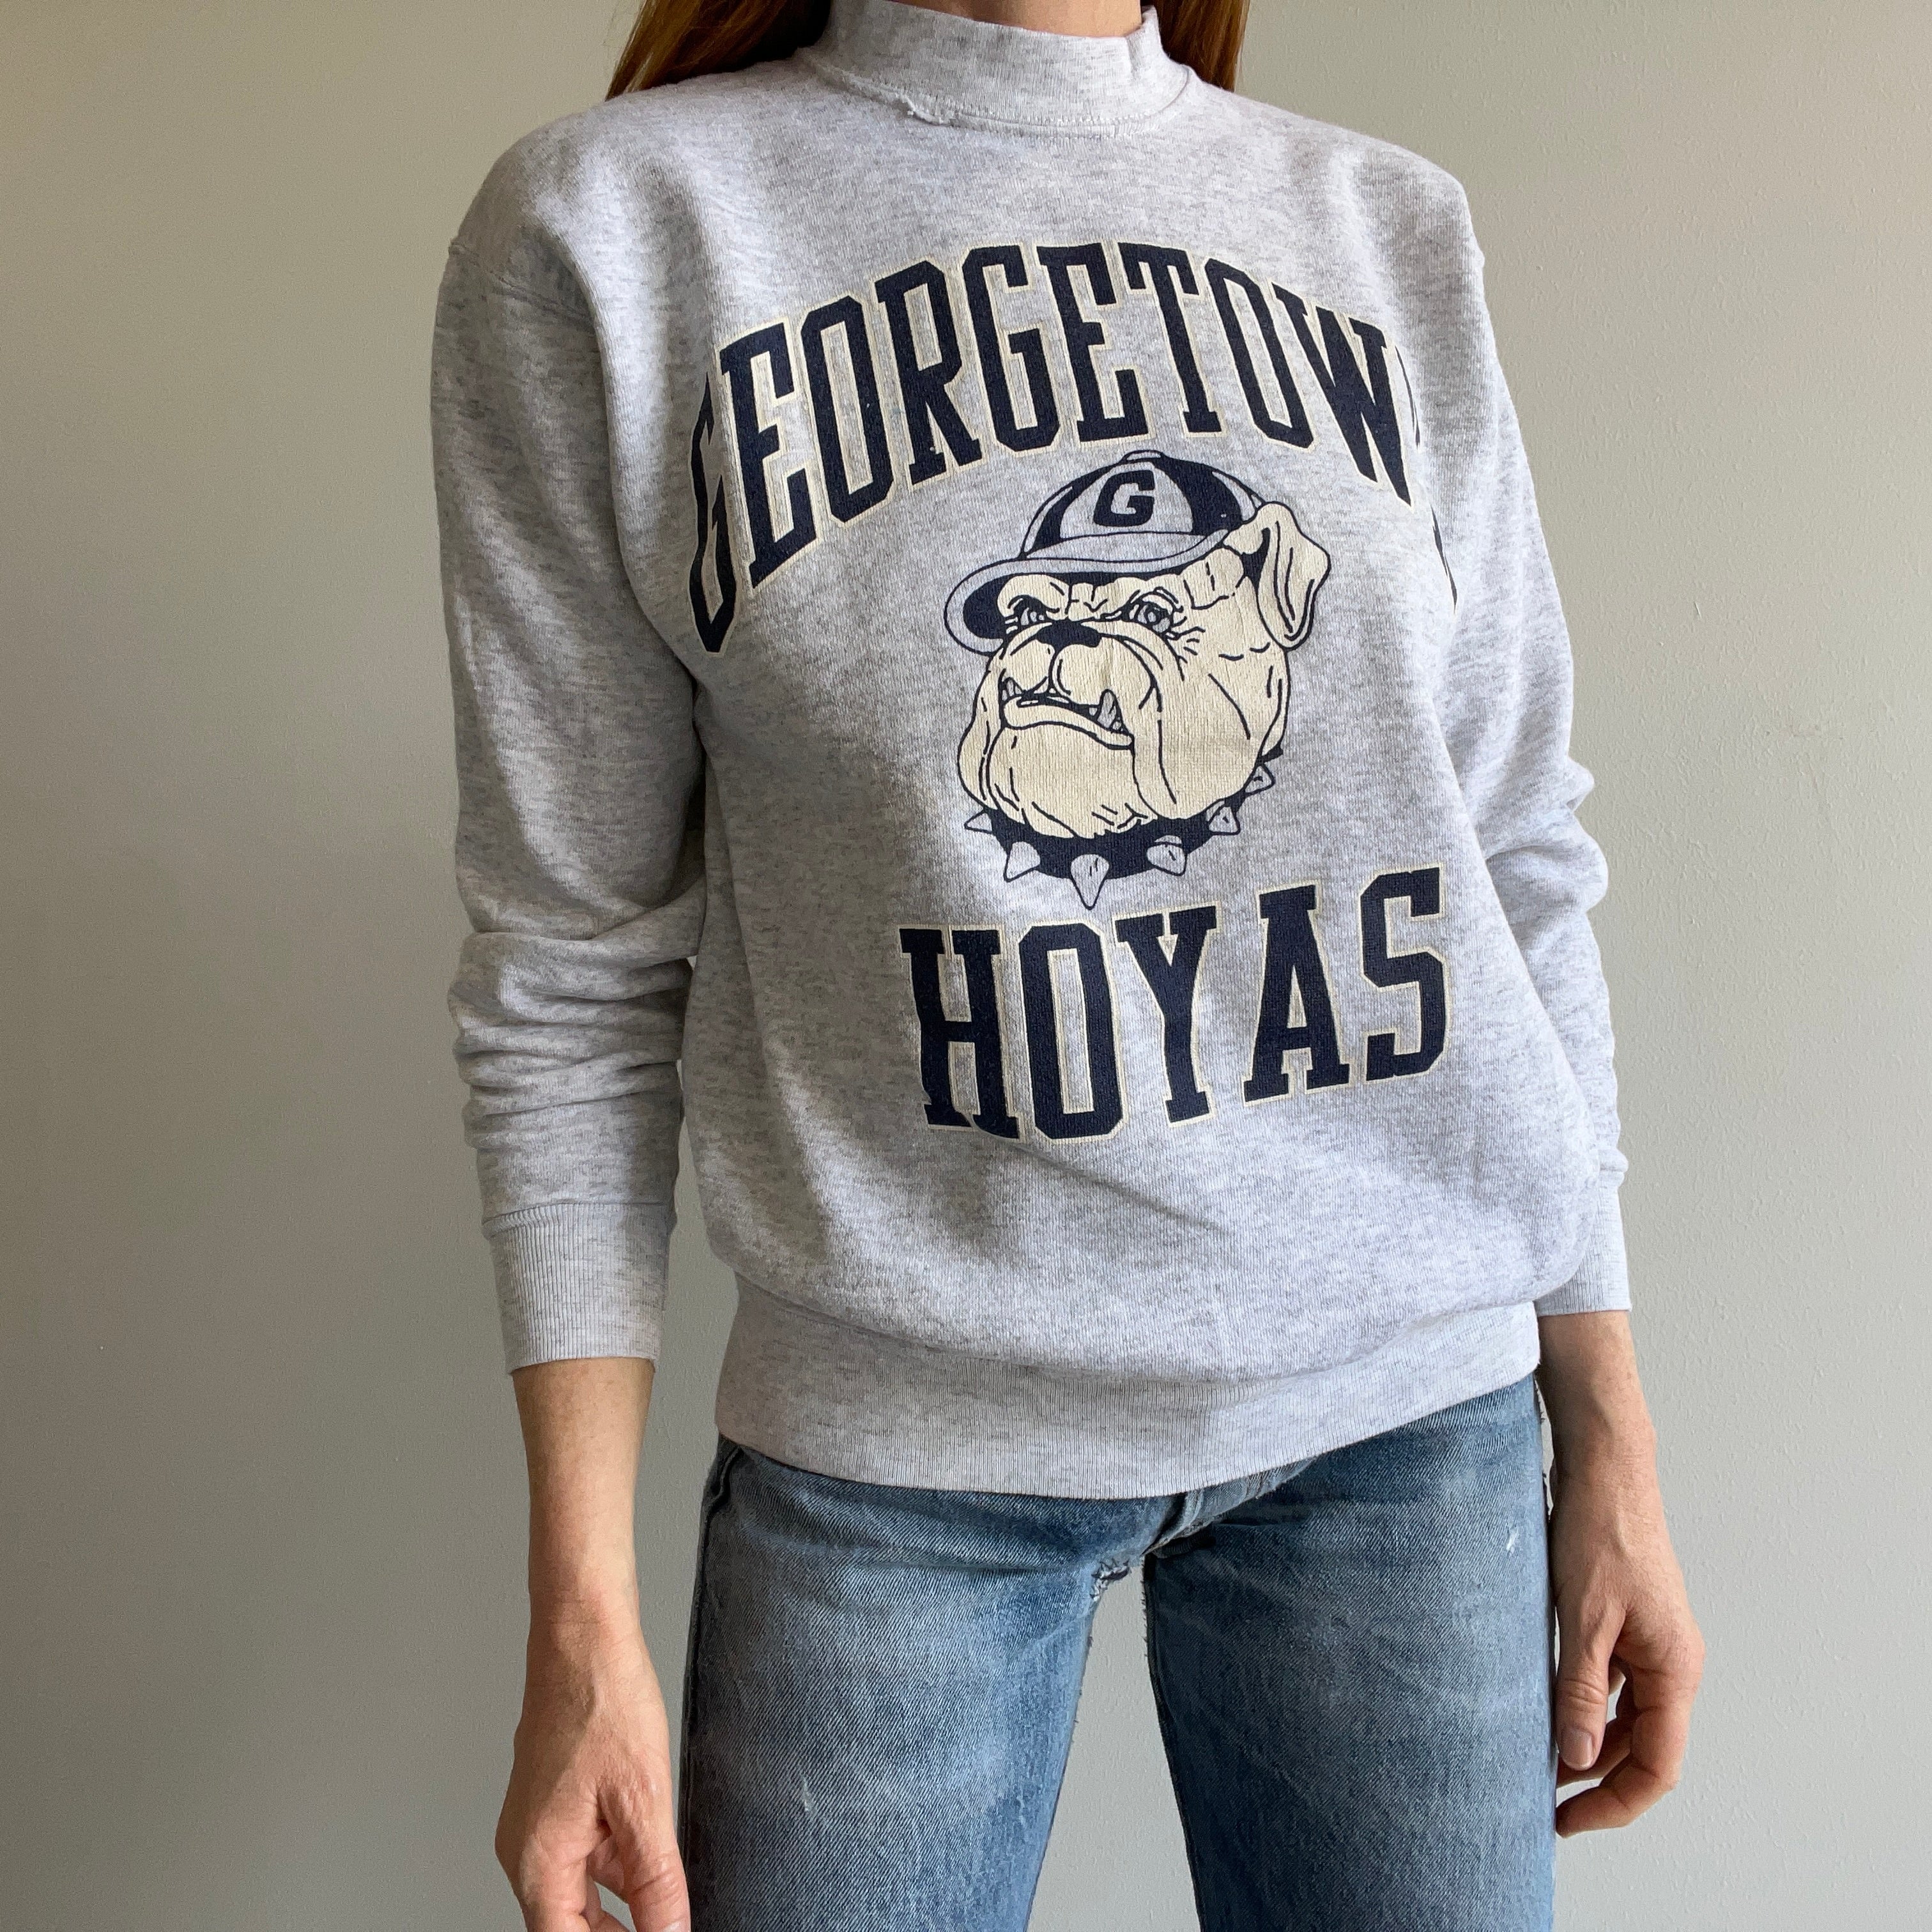 1980s Georgetown Hoyas Sweatshirt by Velva Sheen